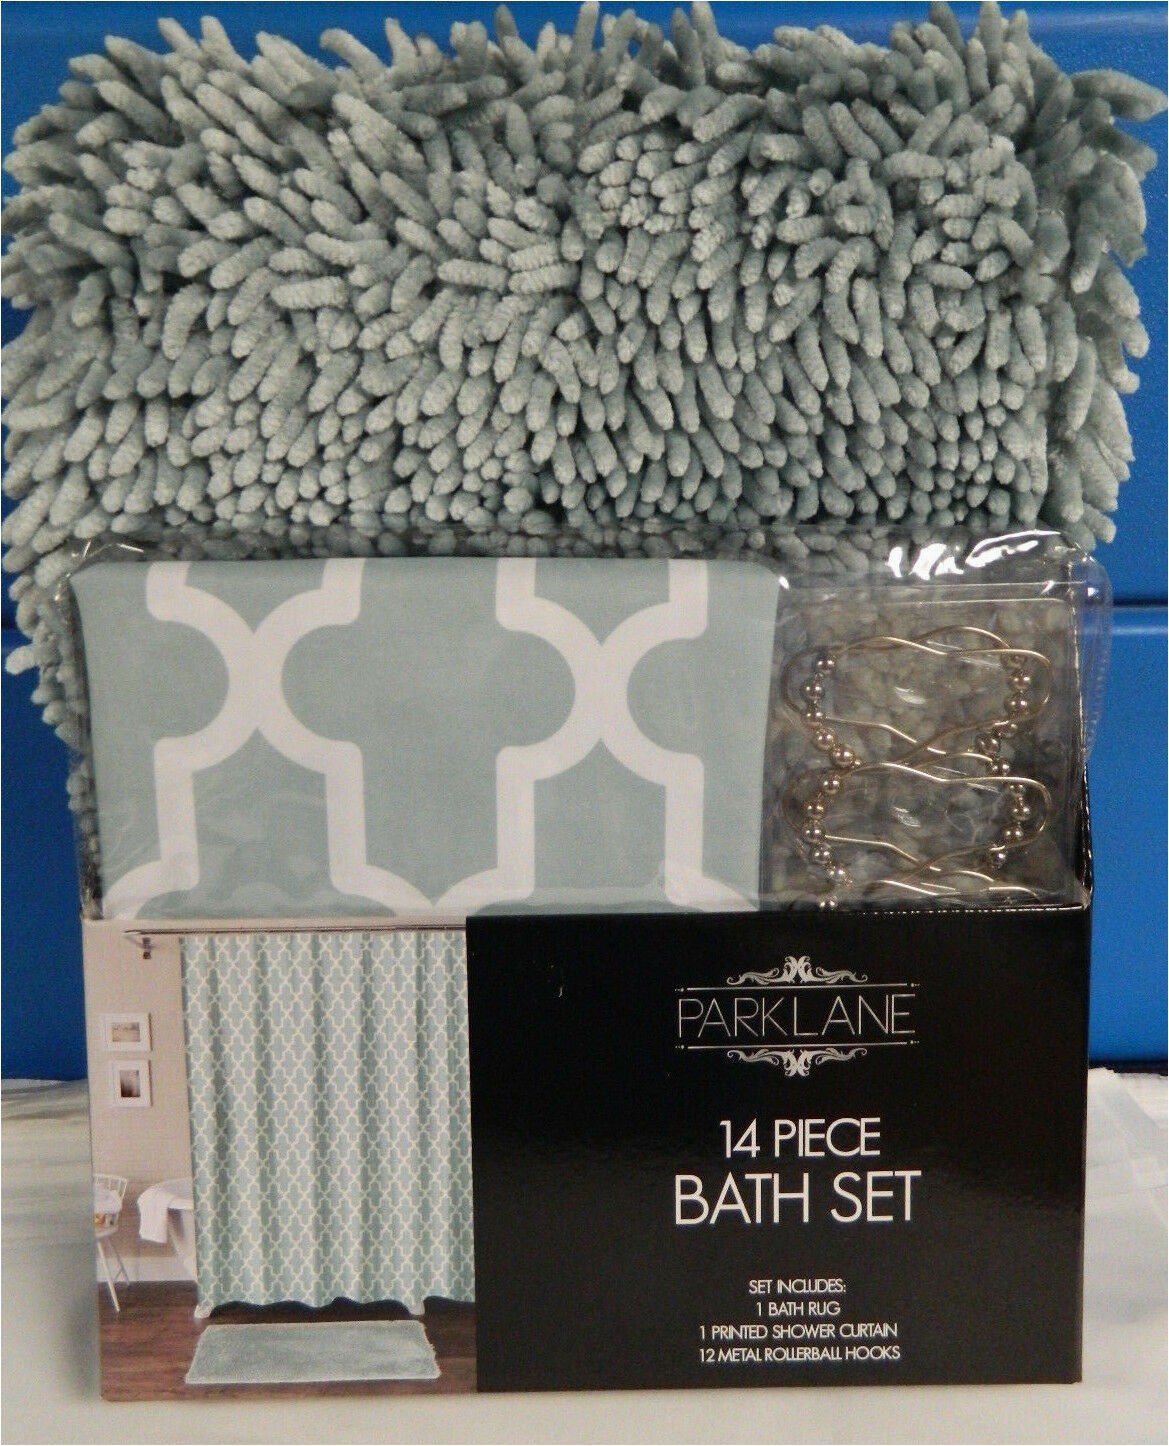 Bath Rug Sets at Kohl S Nip Parklane From Kohls 14 Pc Bath Set Rug Printed Shower Curtain 12 Hooks